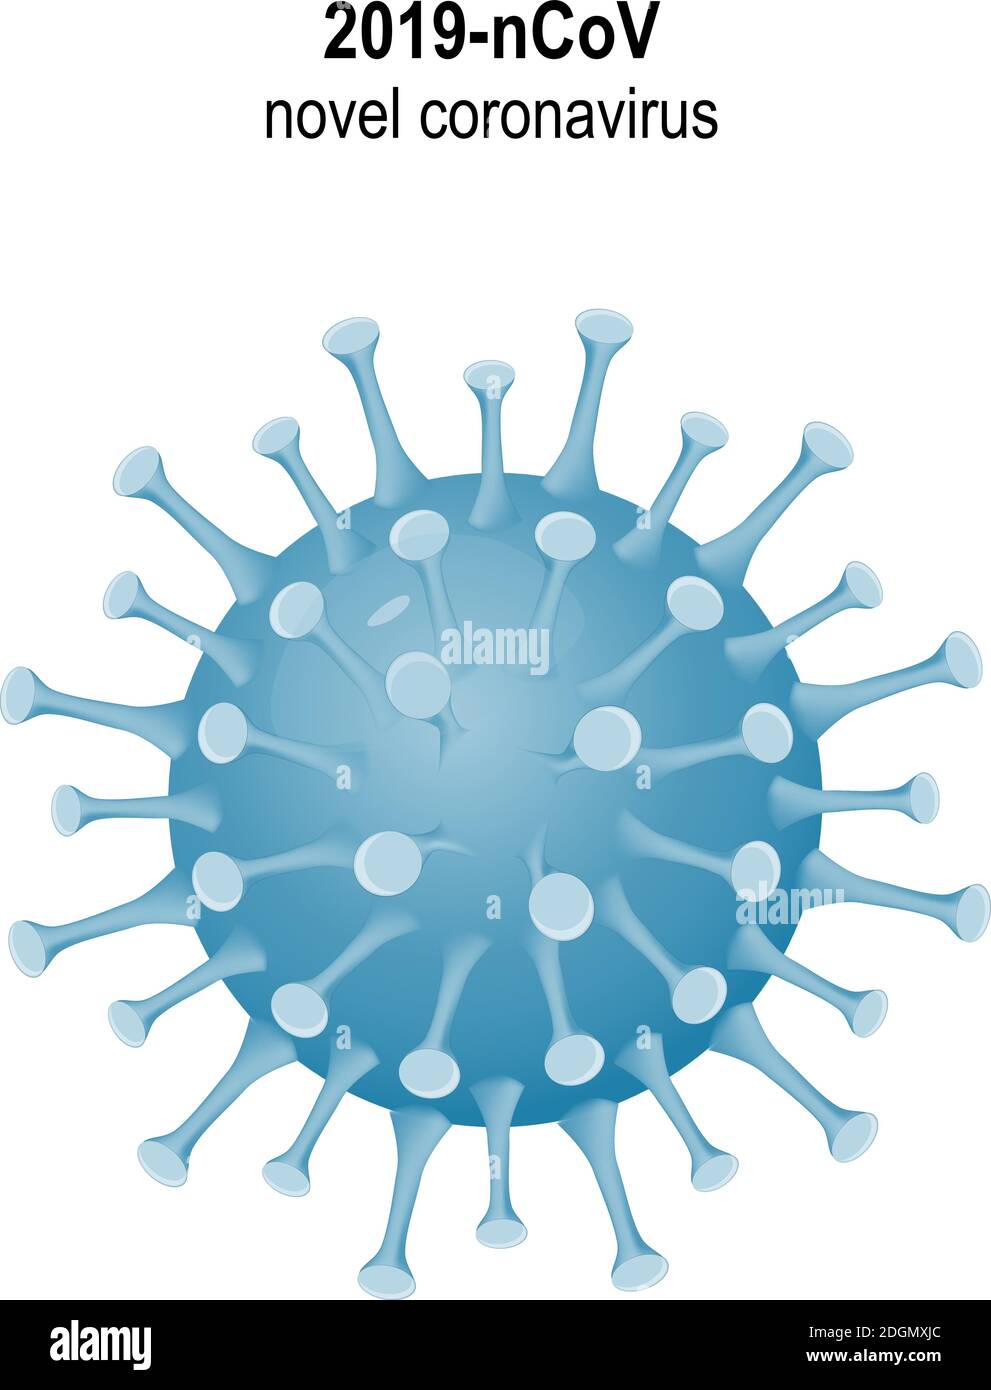 COVID-19. Corona virus icon, symbol or unit. Global pandemic alert of Coronavirus. 2019-nCoV acute respiratory disease Stock Vector